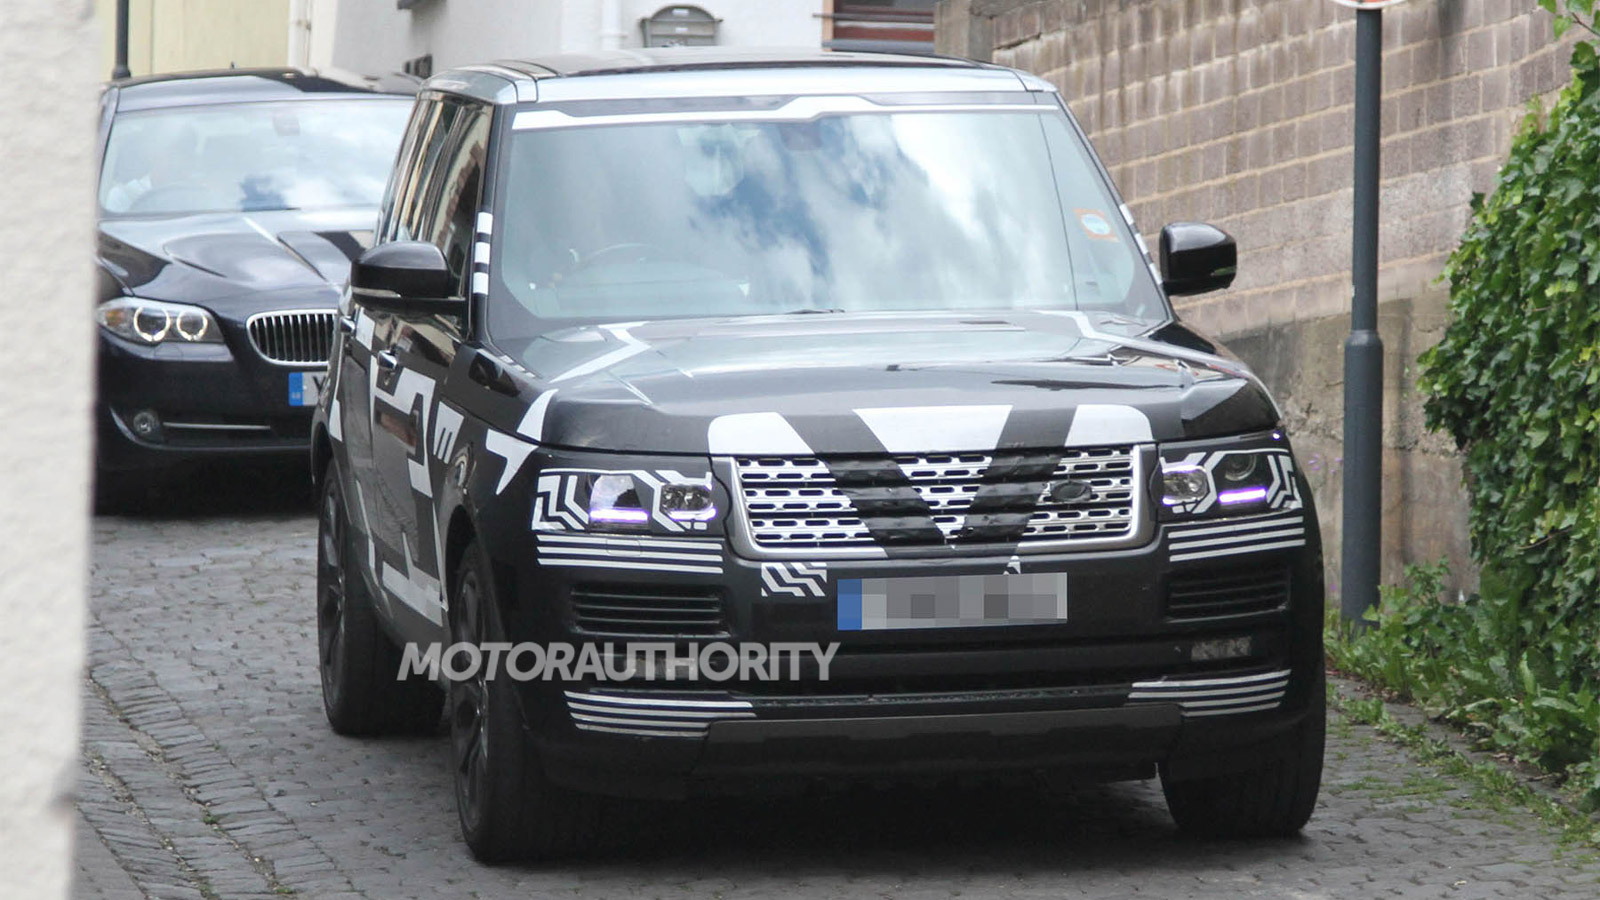 2013 Land Rover Range Rover spy shots